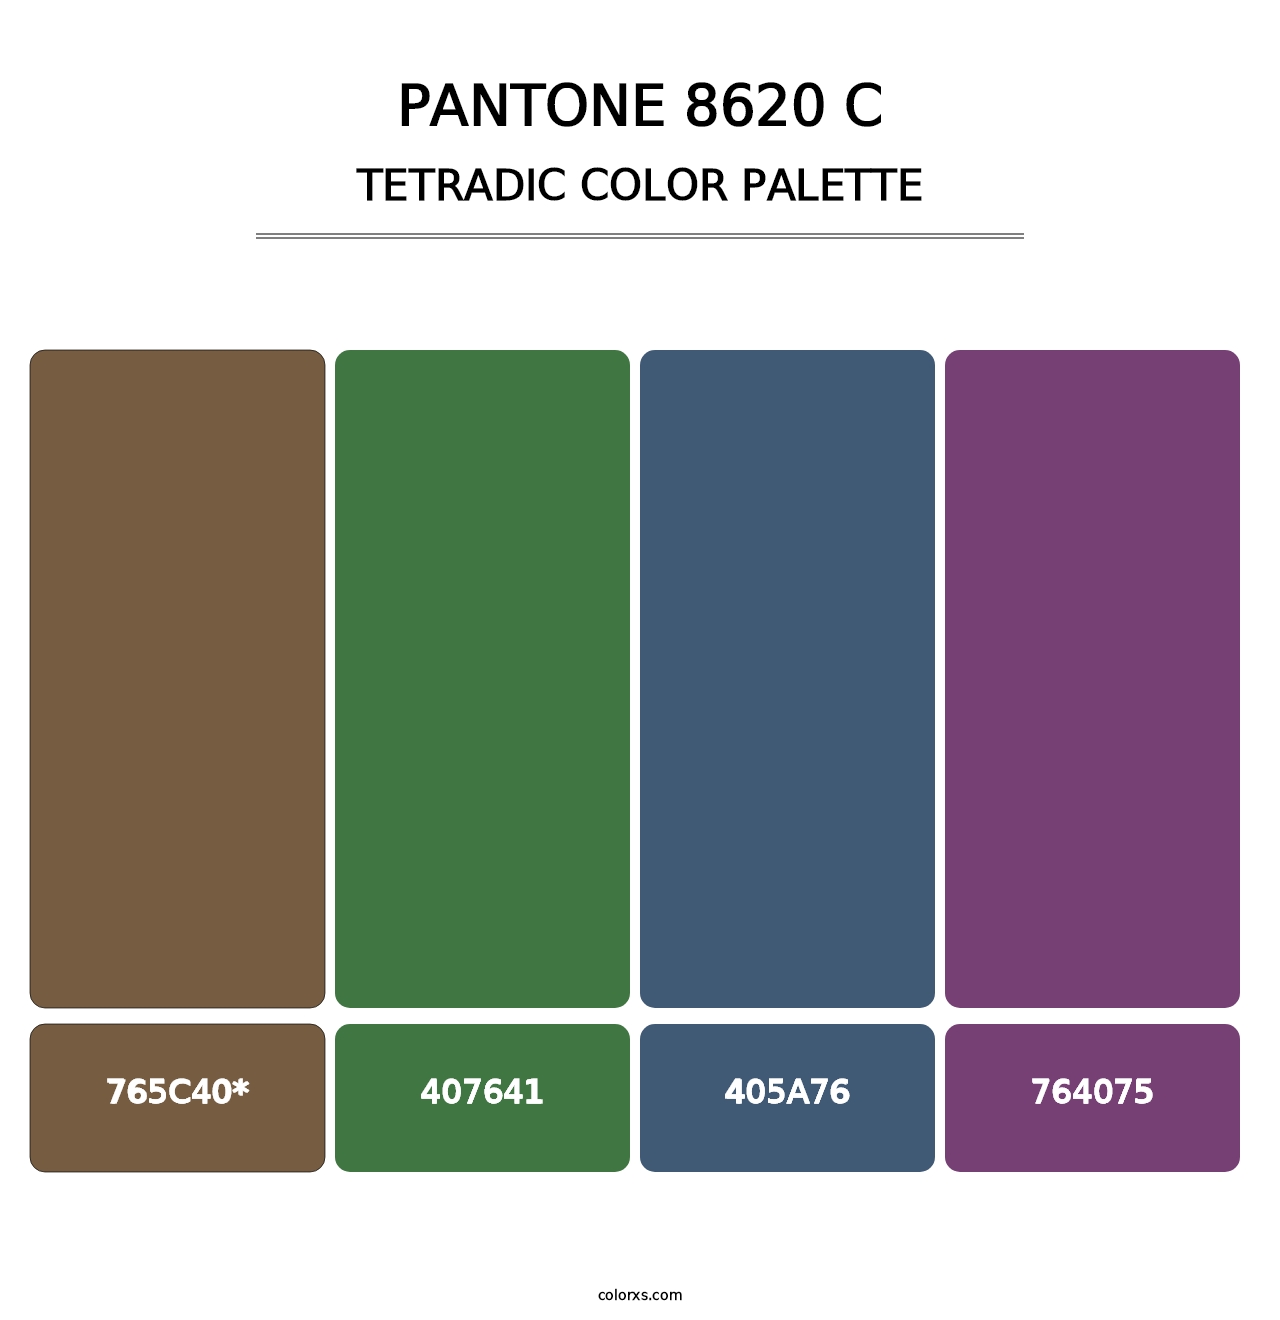 PANTONE 8620 C - Tetradic Color Palette